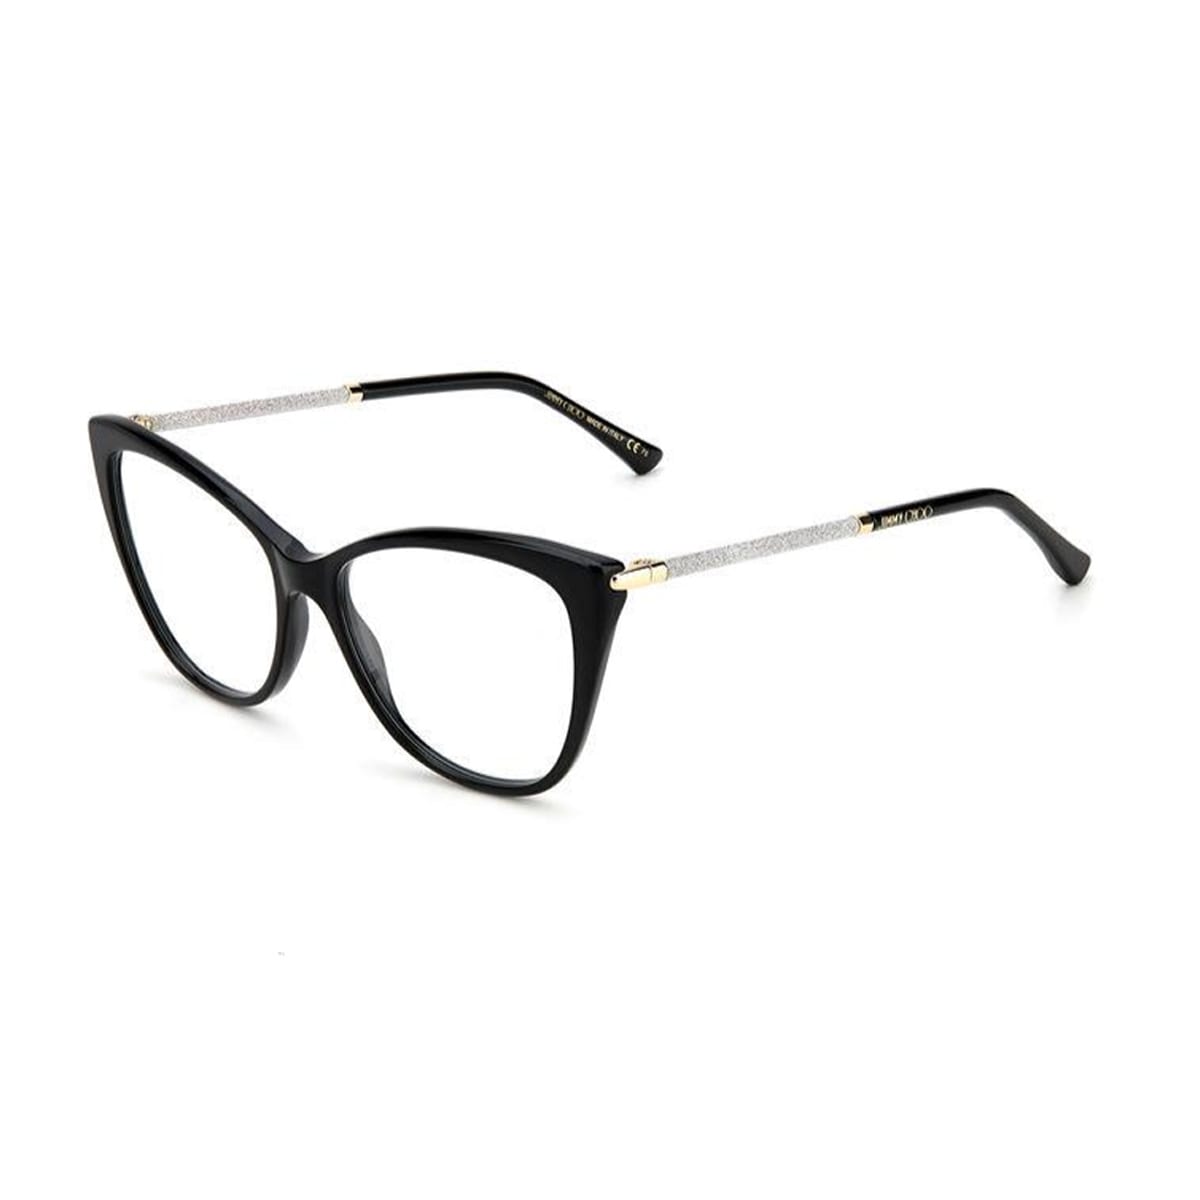 Jimmy Choo Eyewear Jc331 807/16 Glasses